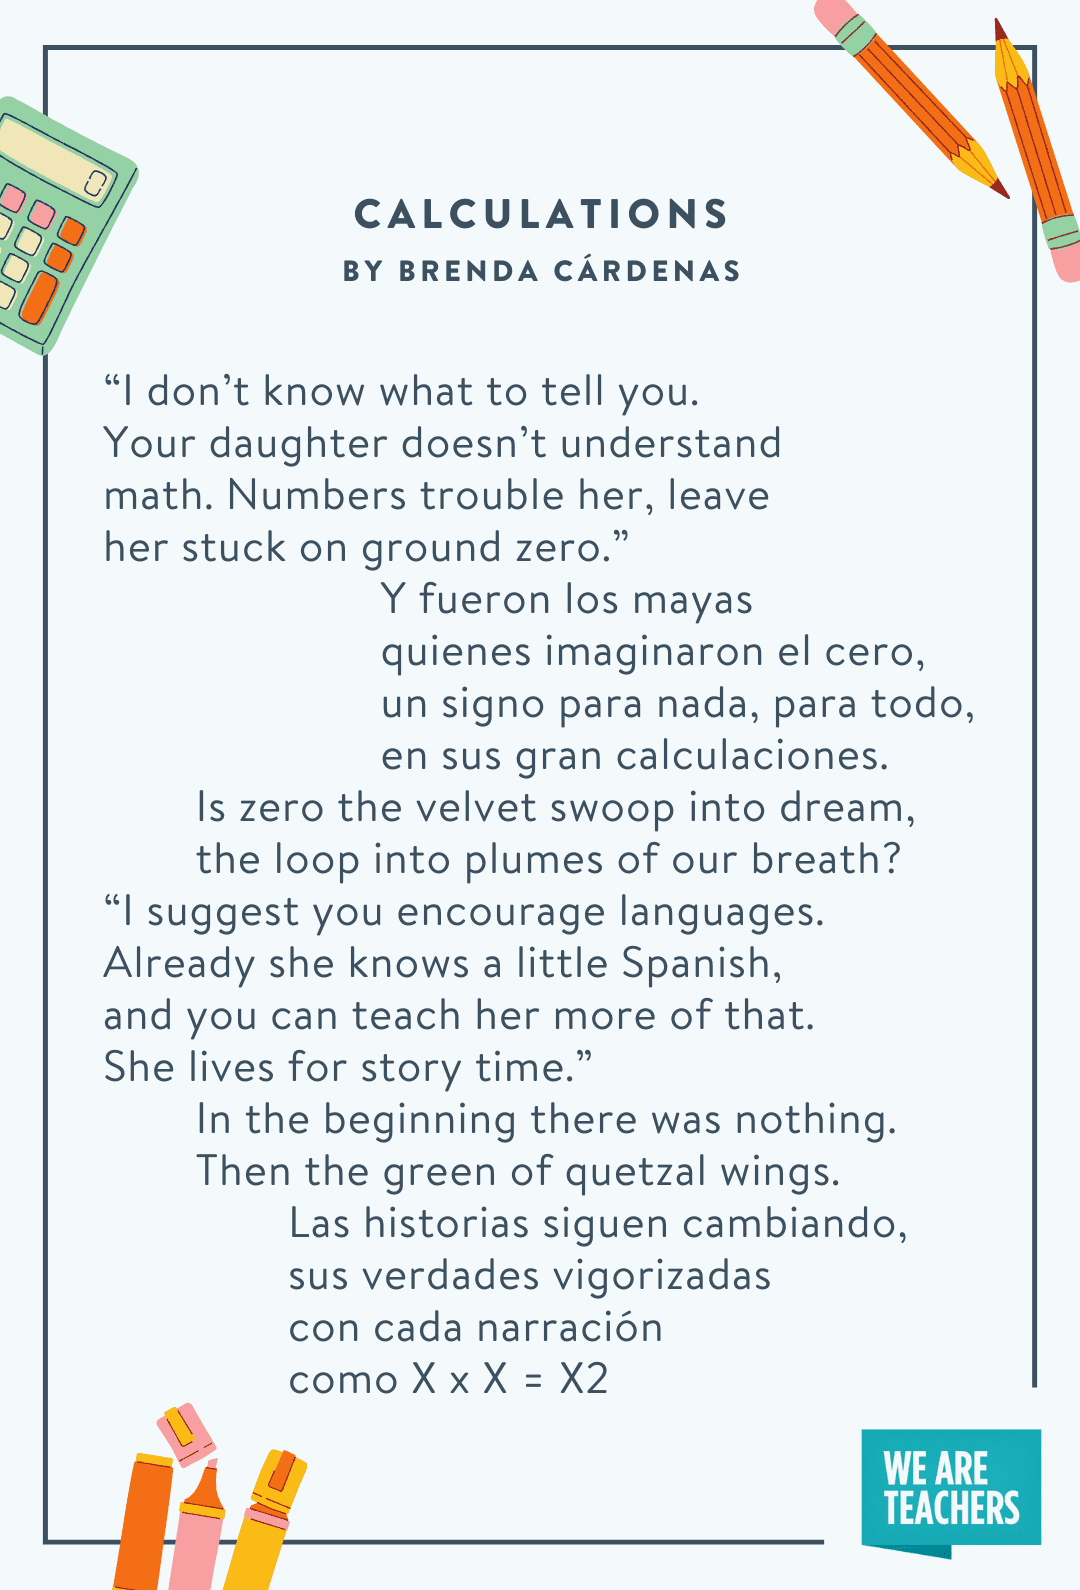 Calculations  by Brenda Cárdenas -- back to school poems